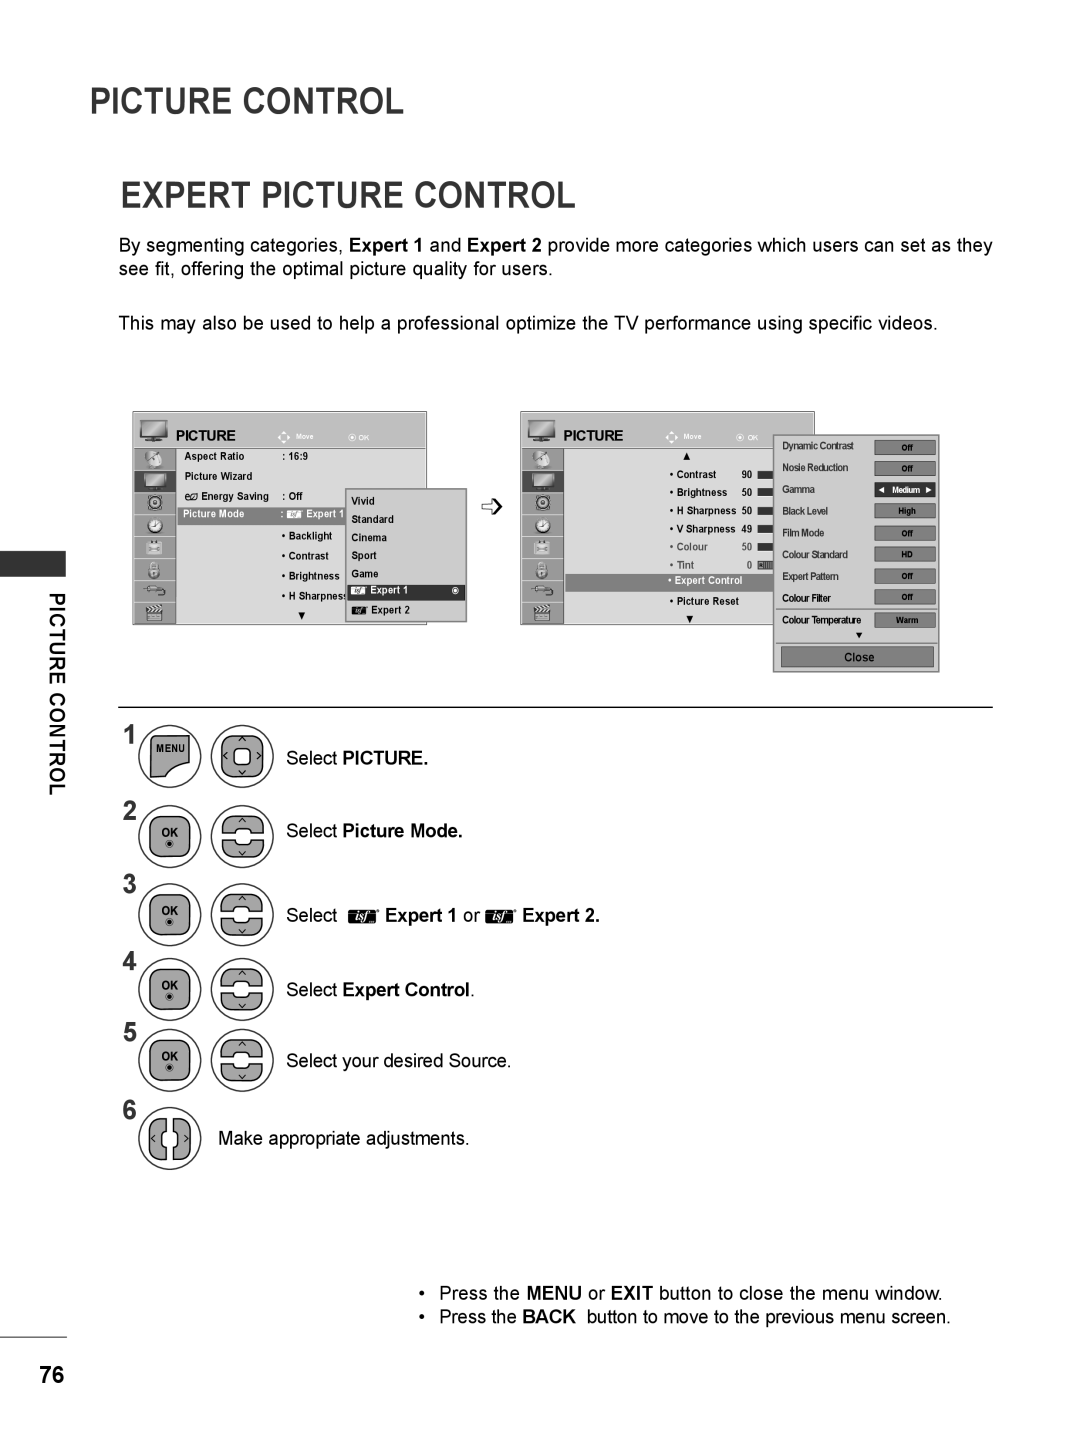 LG Electronics M2780DN, M2780DF, M2380DN, M2380DB, M2380DF Picture Control Expert Picture Control, Select Expert Control 